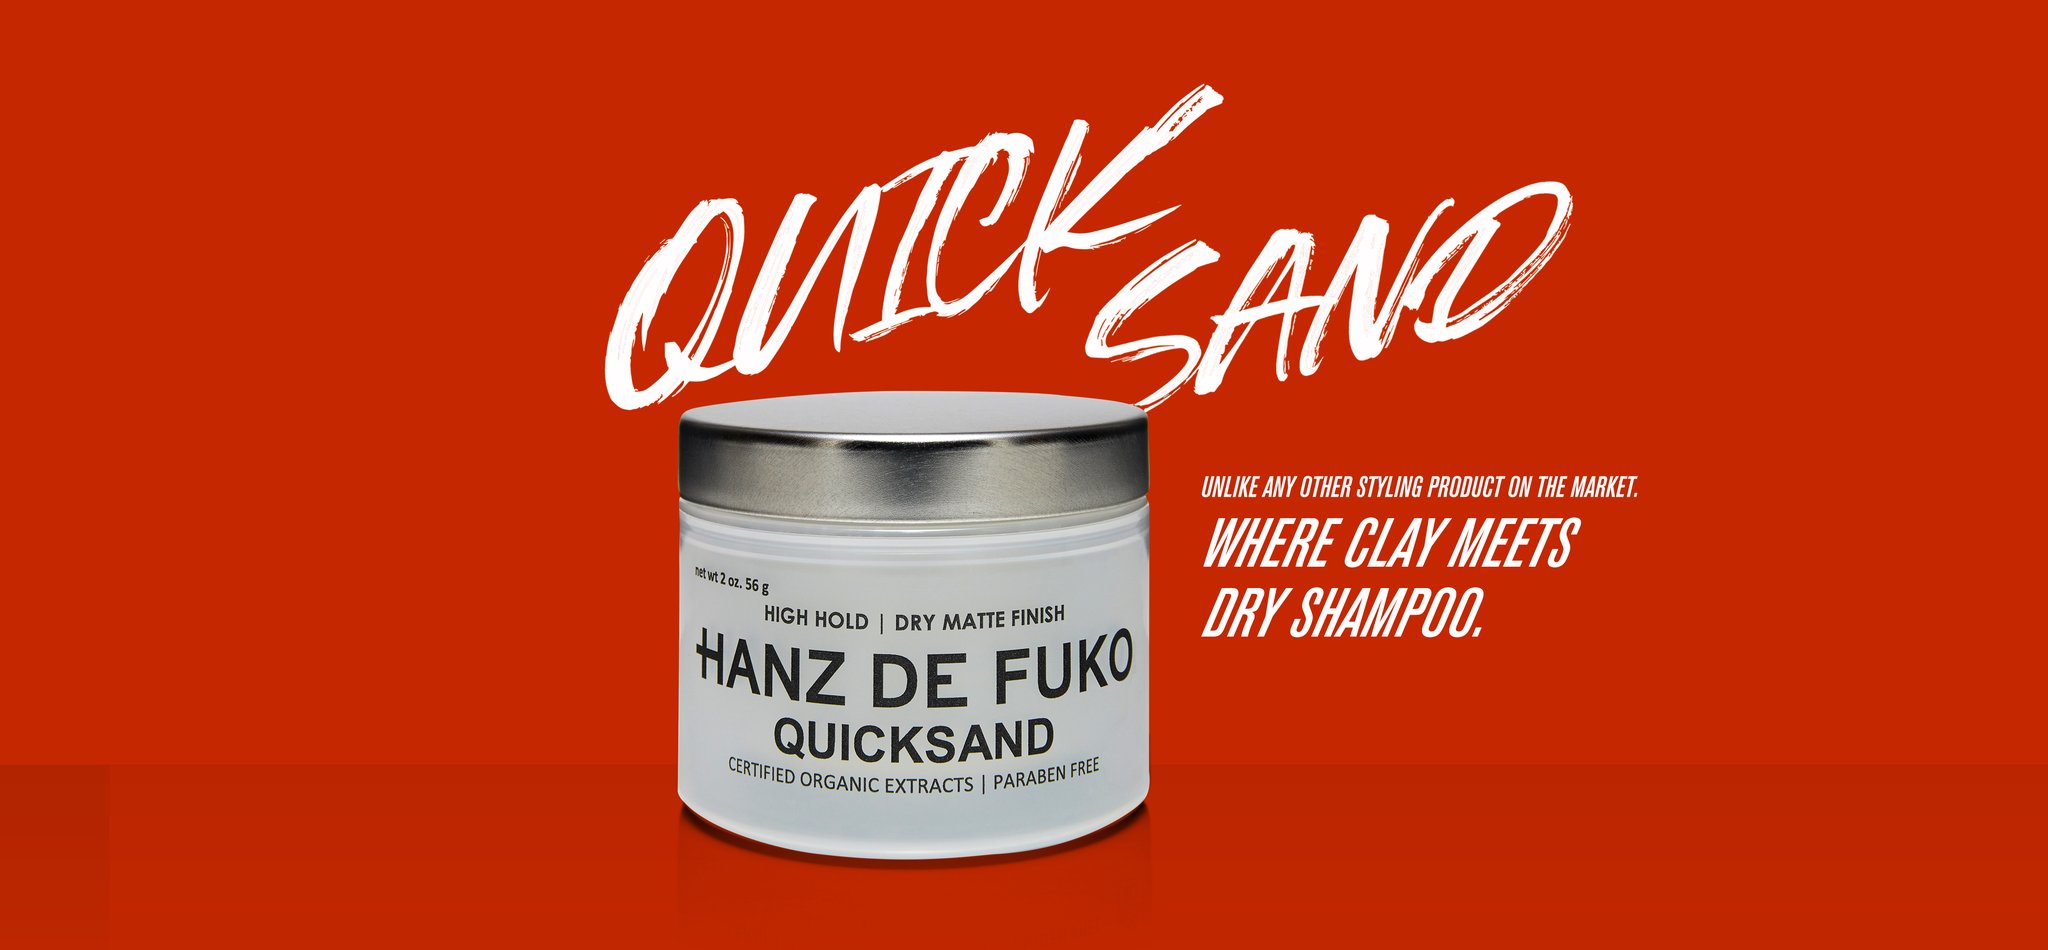 Hanz De Fuko Quicksand